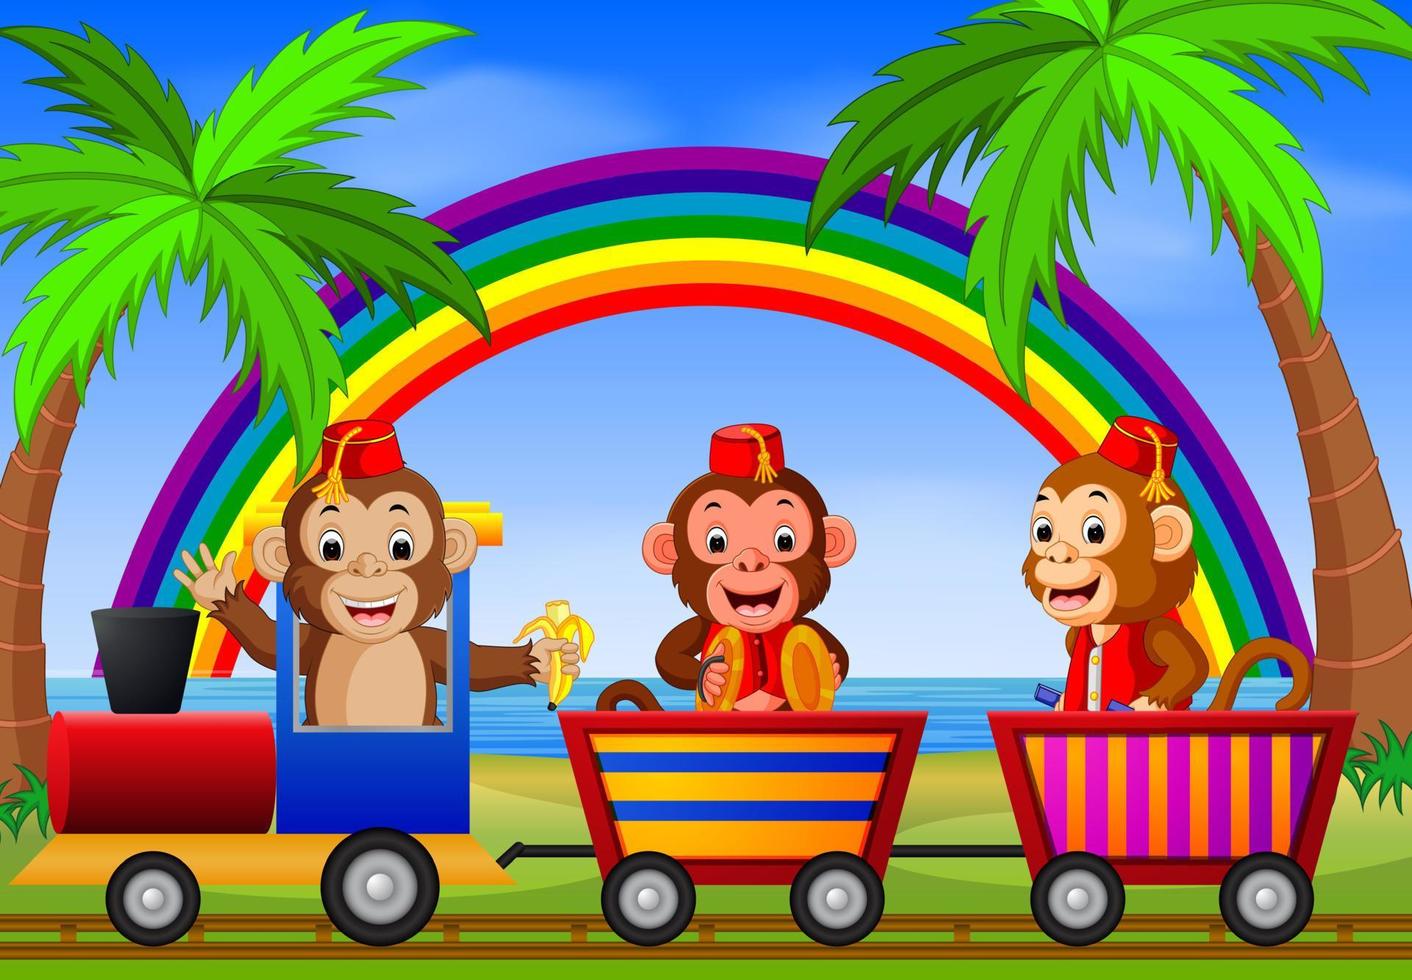 Monkey on the train with rainbow illustration vector